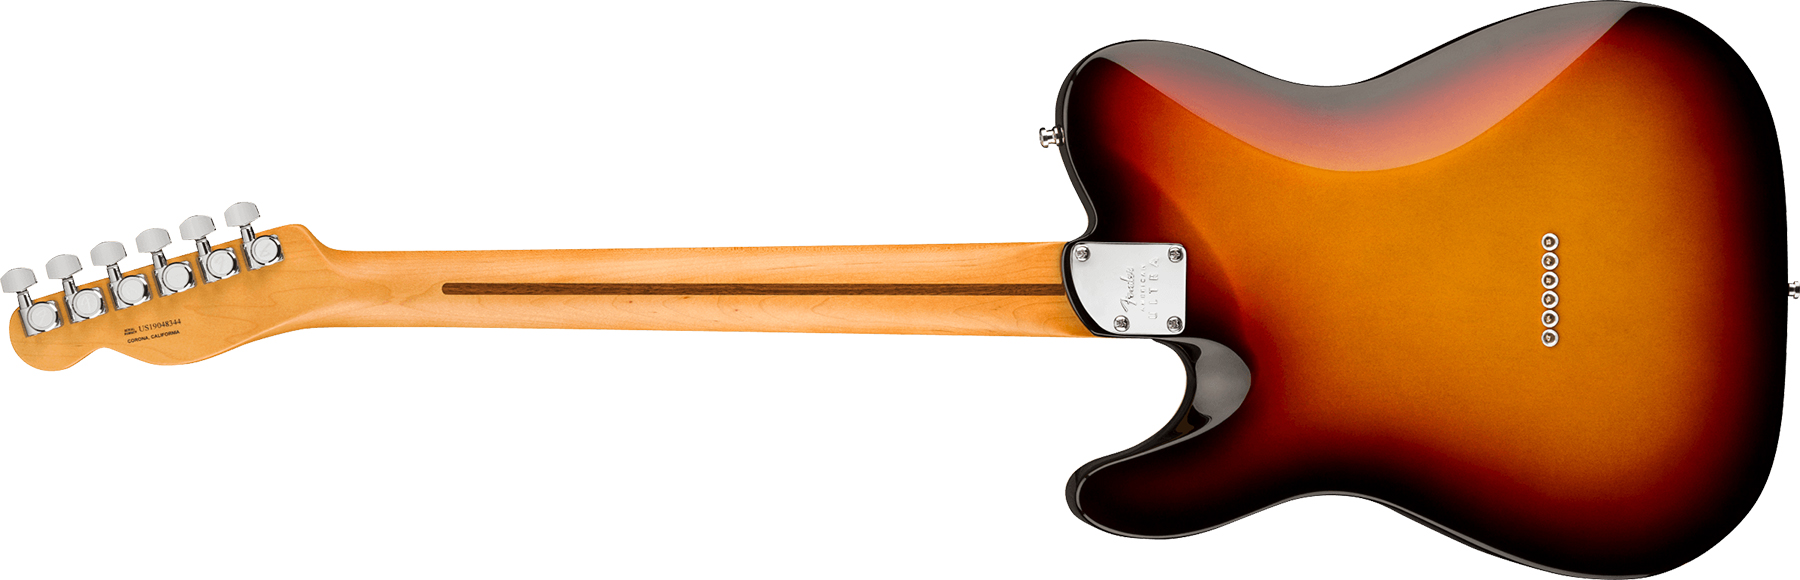 Fender Tele American Ultra 2019 Usa Mn - Ultraburst - Guitarra eléctrica con forma de tel - Variation 1